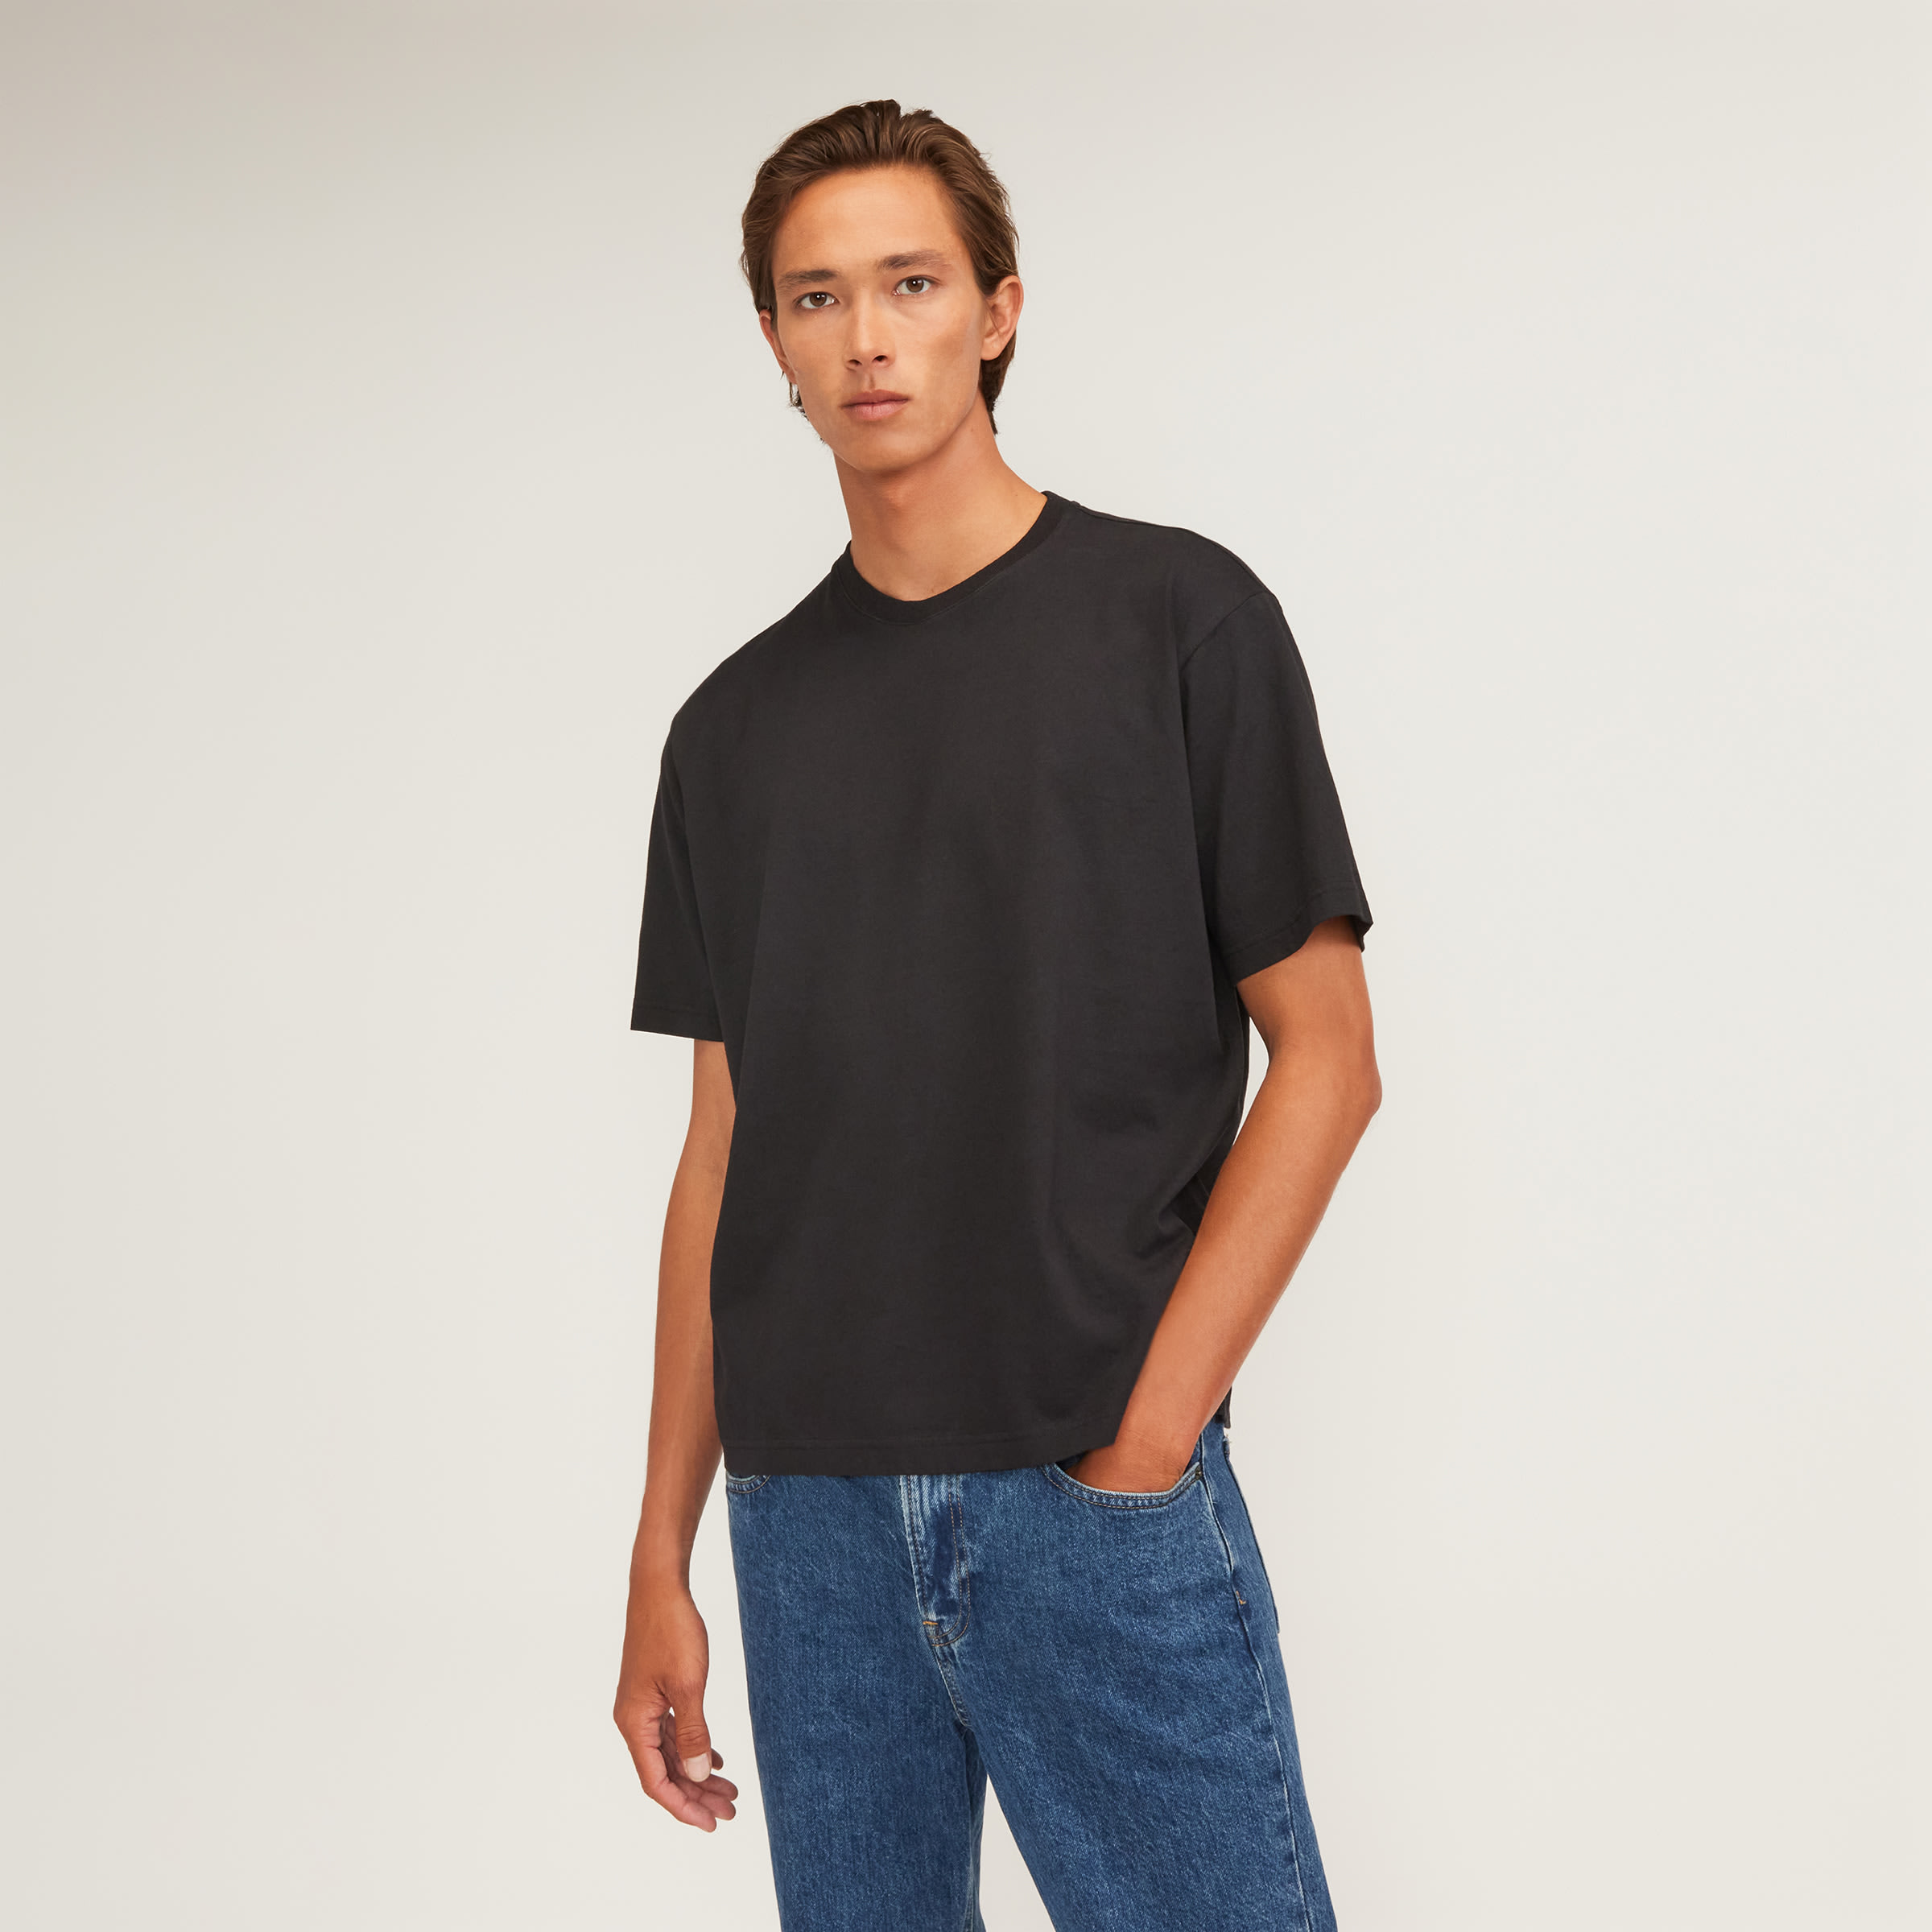 Everlane Men's Premium-Weight Crew Neck | Uniform T-Shirt in Black, Size Small